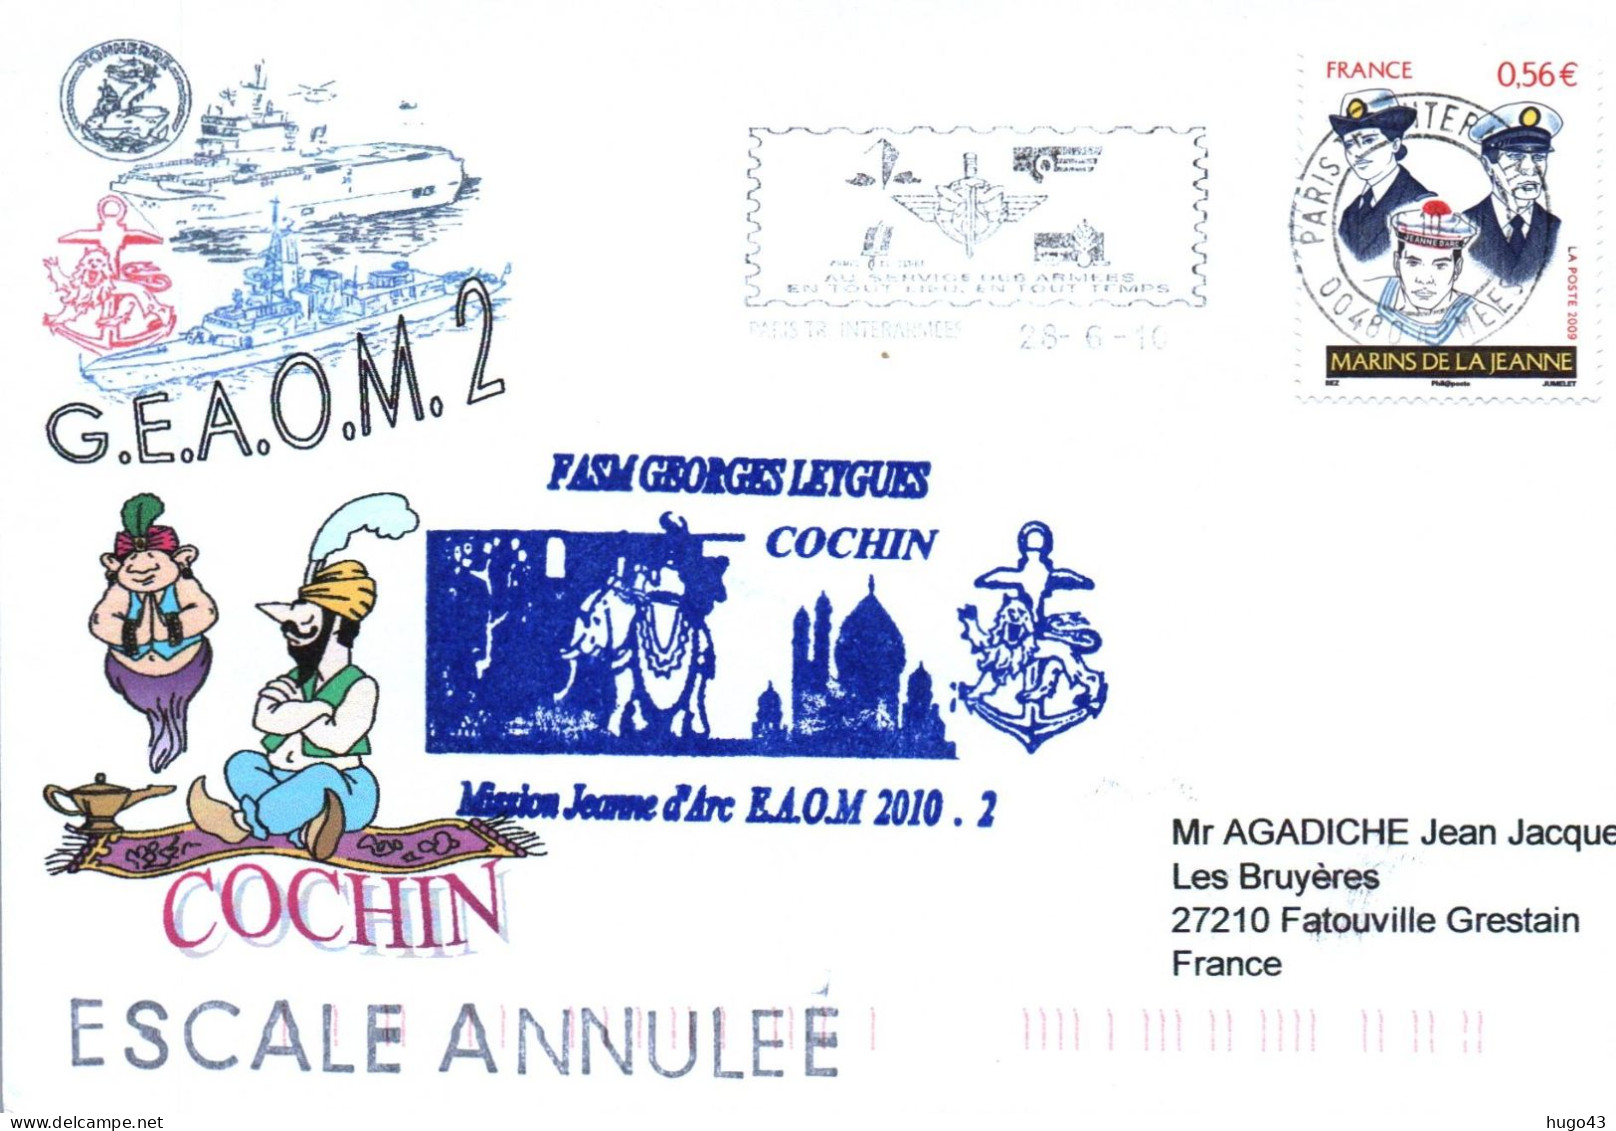 ENVELOPPE AVEC CACHET FREGATE GEORGES LEYGUES - MISSION JEANNE D' ARC GEAOM 2010 - COCHIN - ESCALE ANNULEE - Naval Post